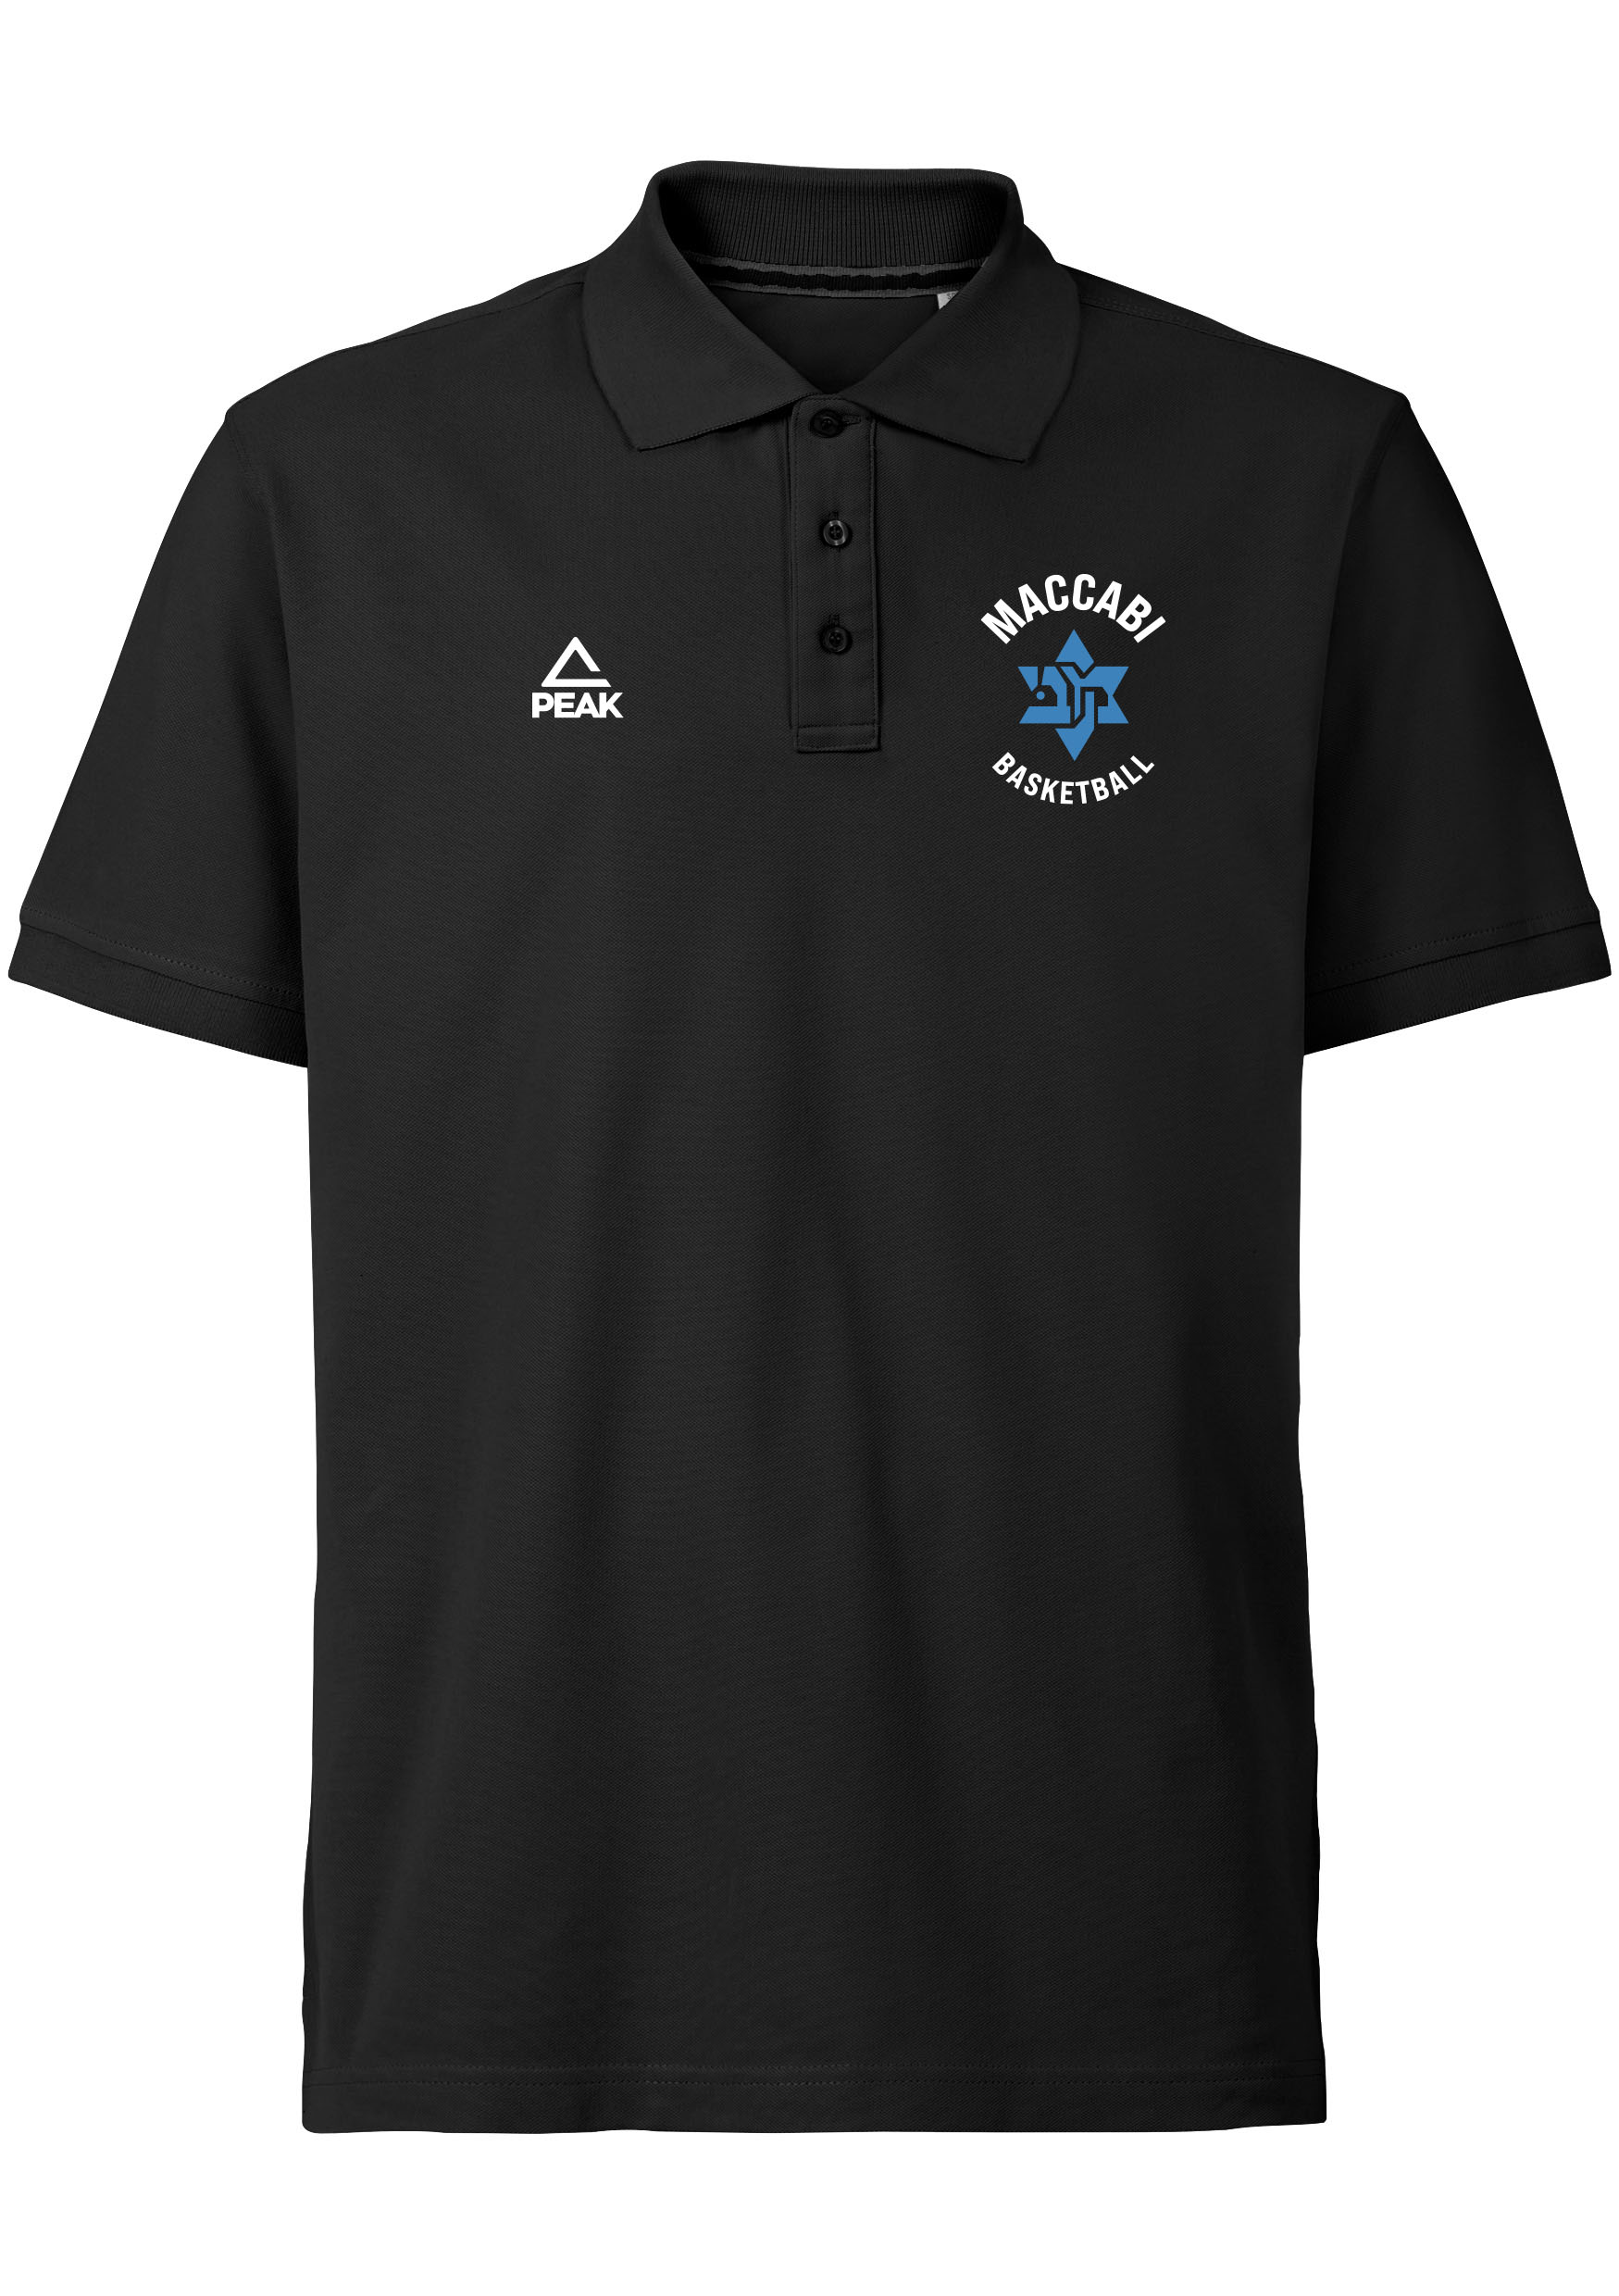 Maccabi München Poloshirt schwarz